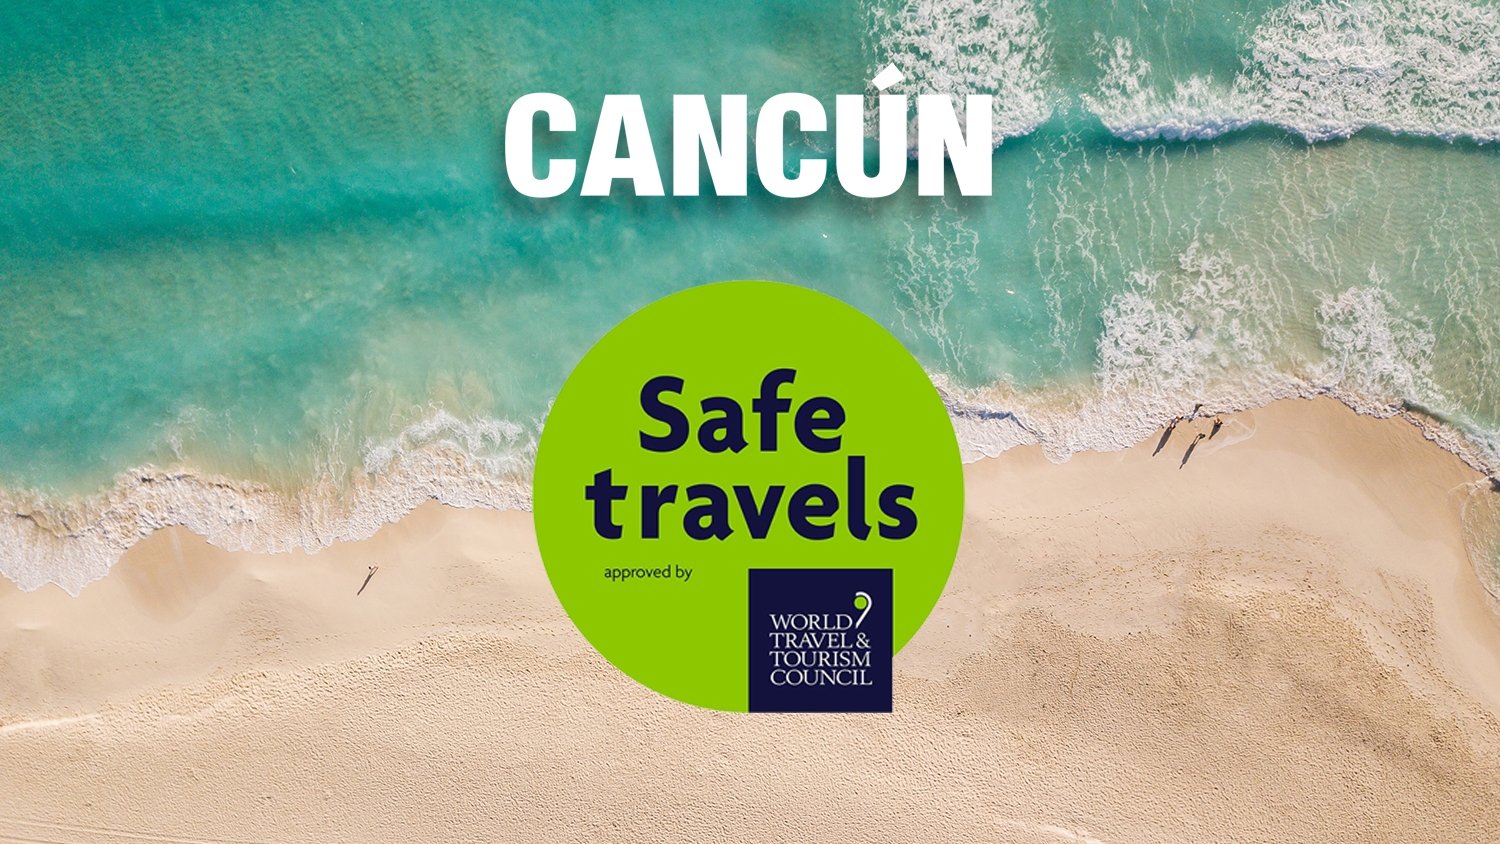 Cancún destino turístico por excelencia recibir sello de seguridad para viajes.